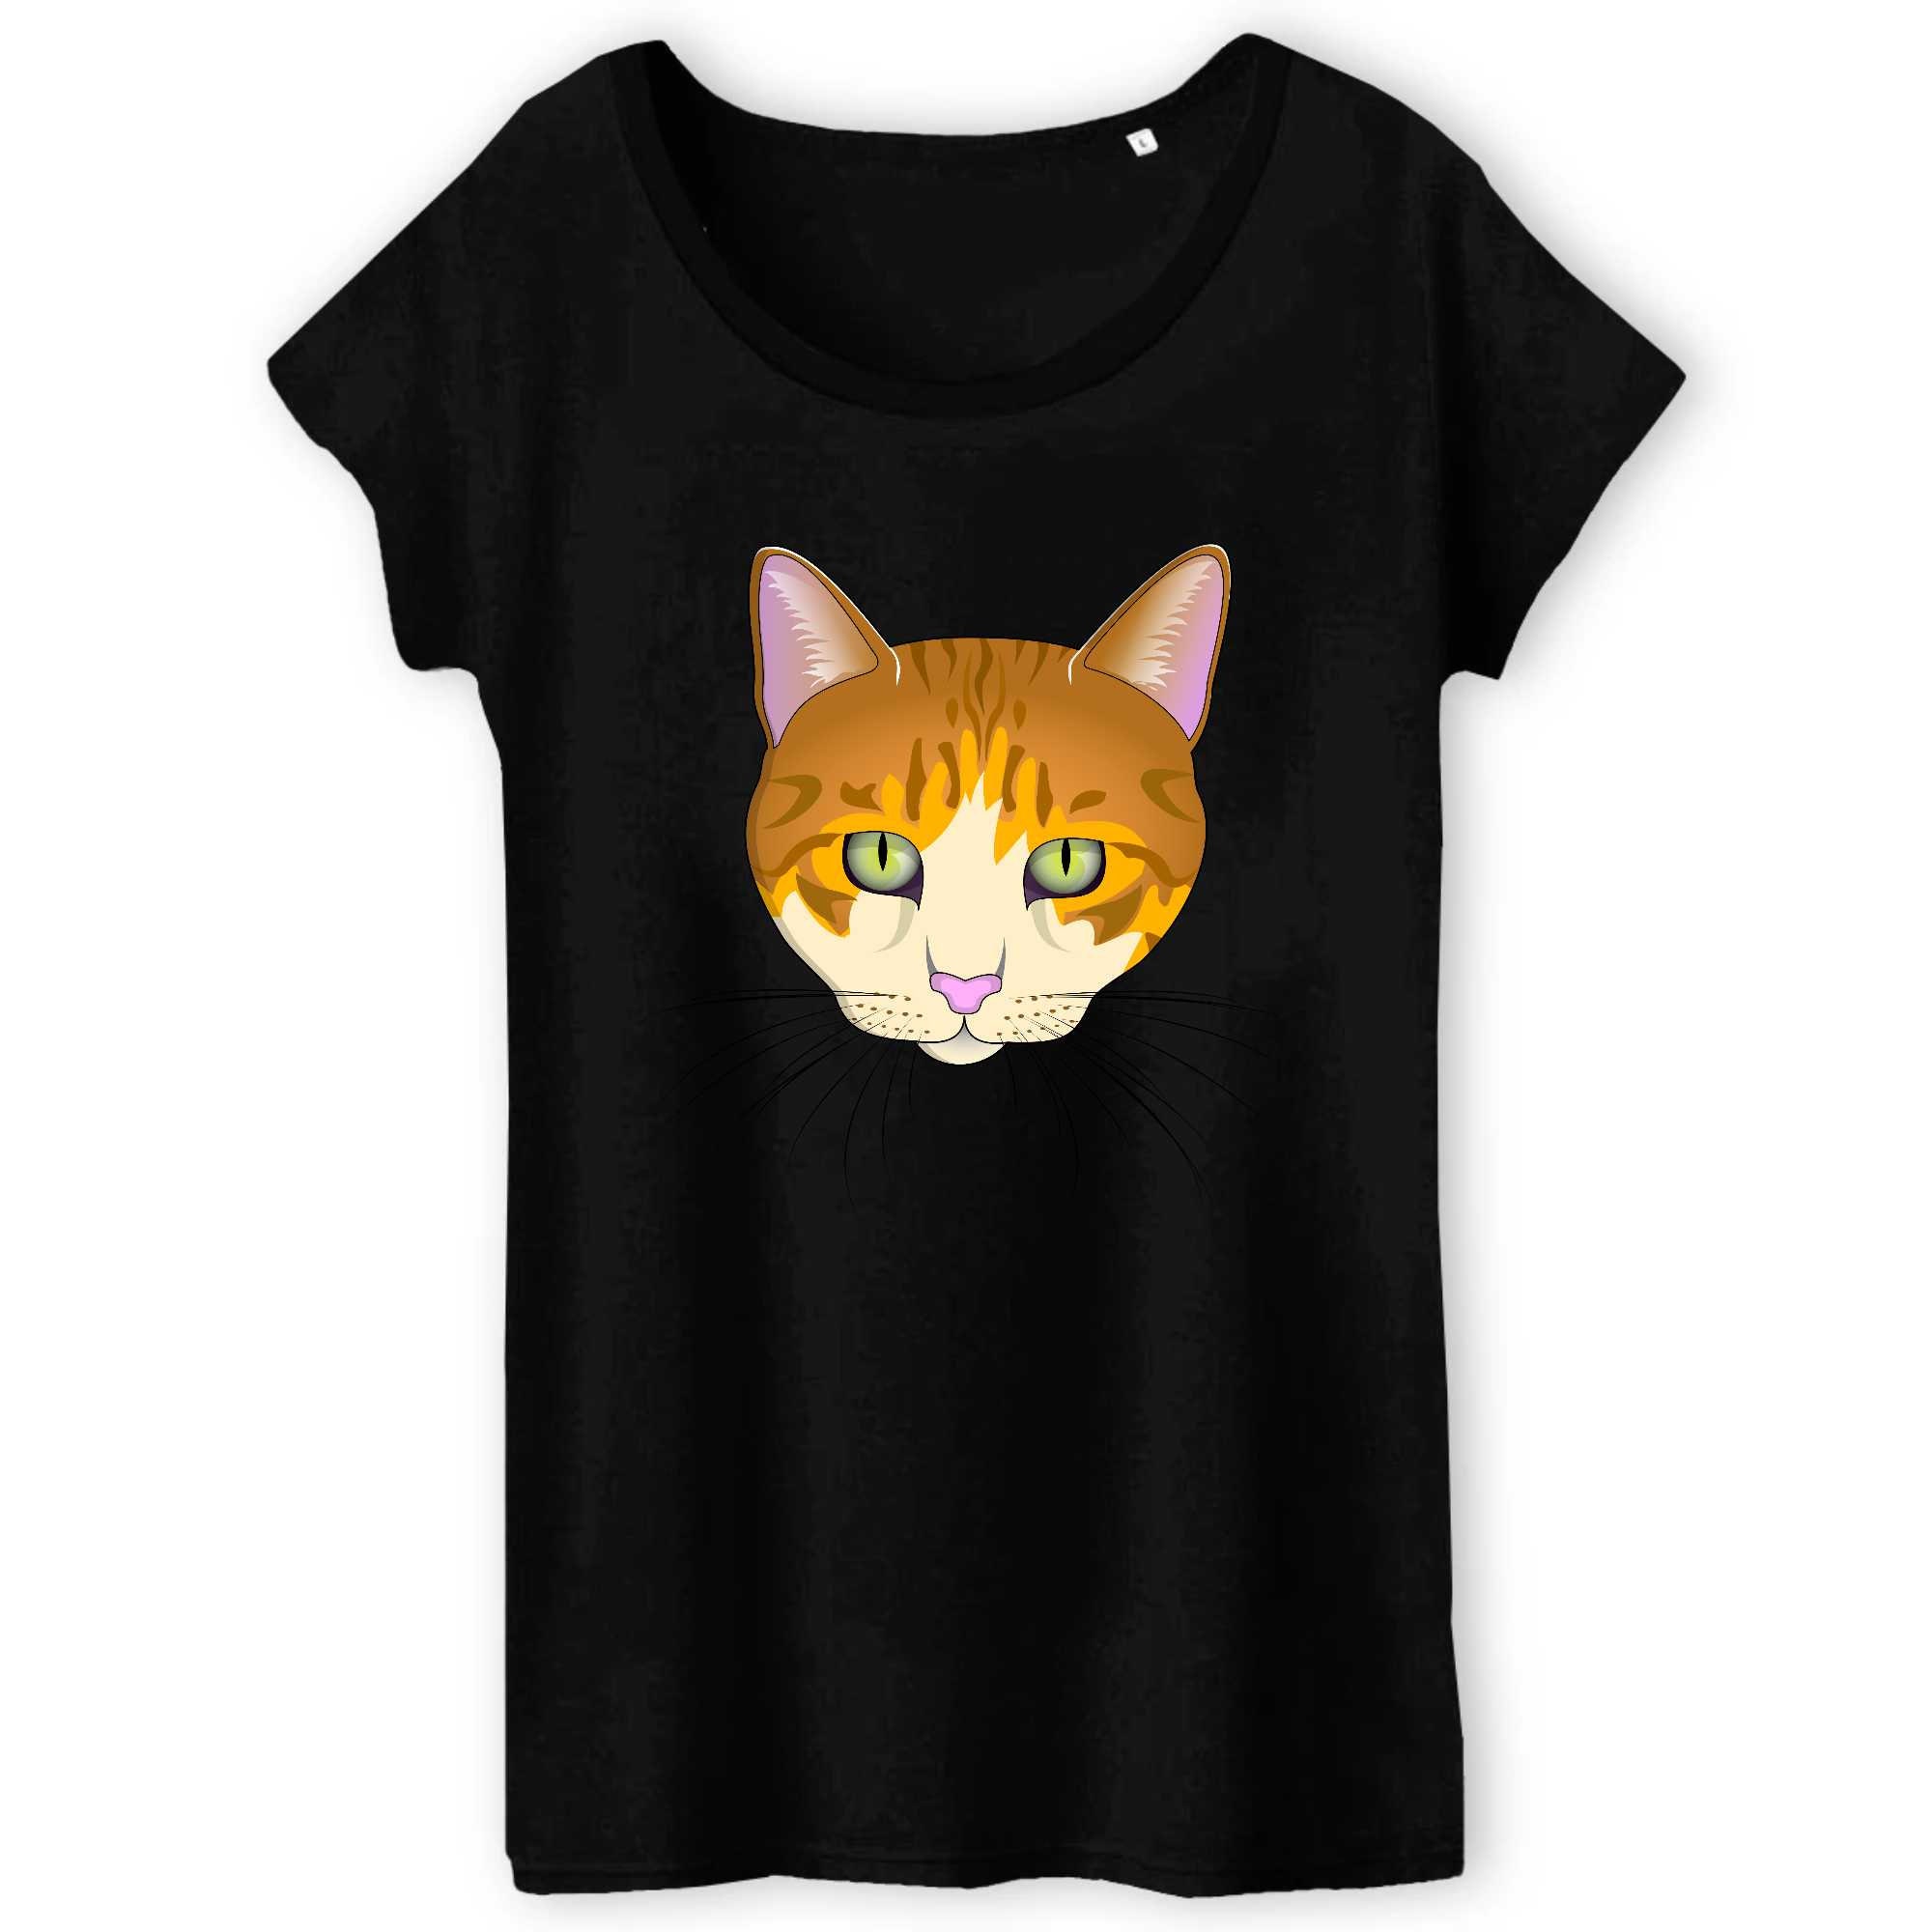 Red Cat BIO Cotton Women's T-shirt - Etsy